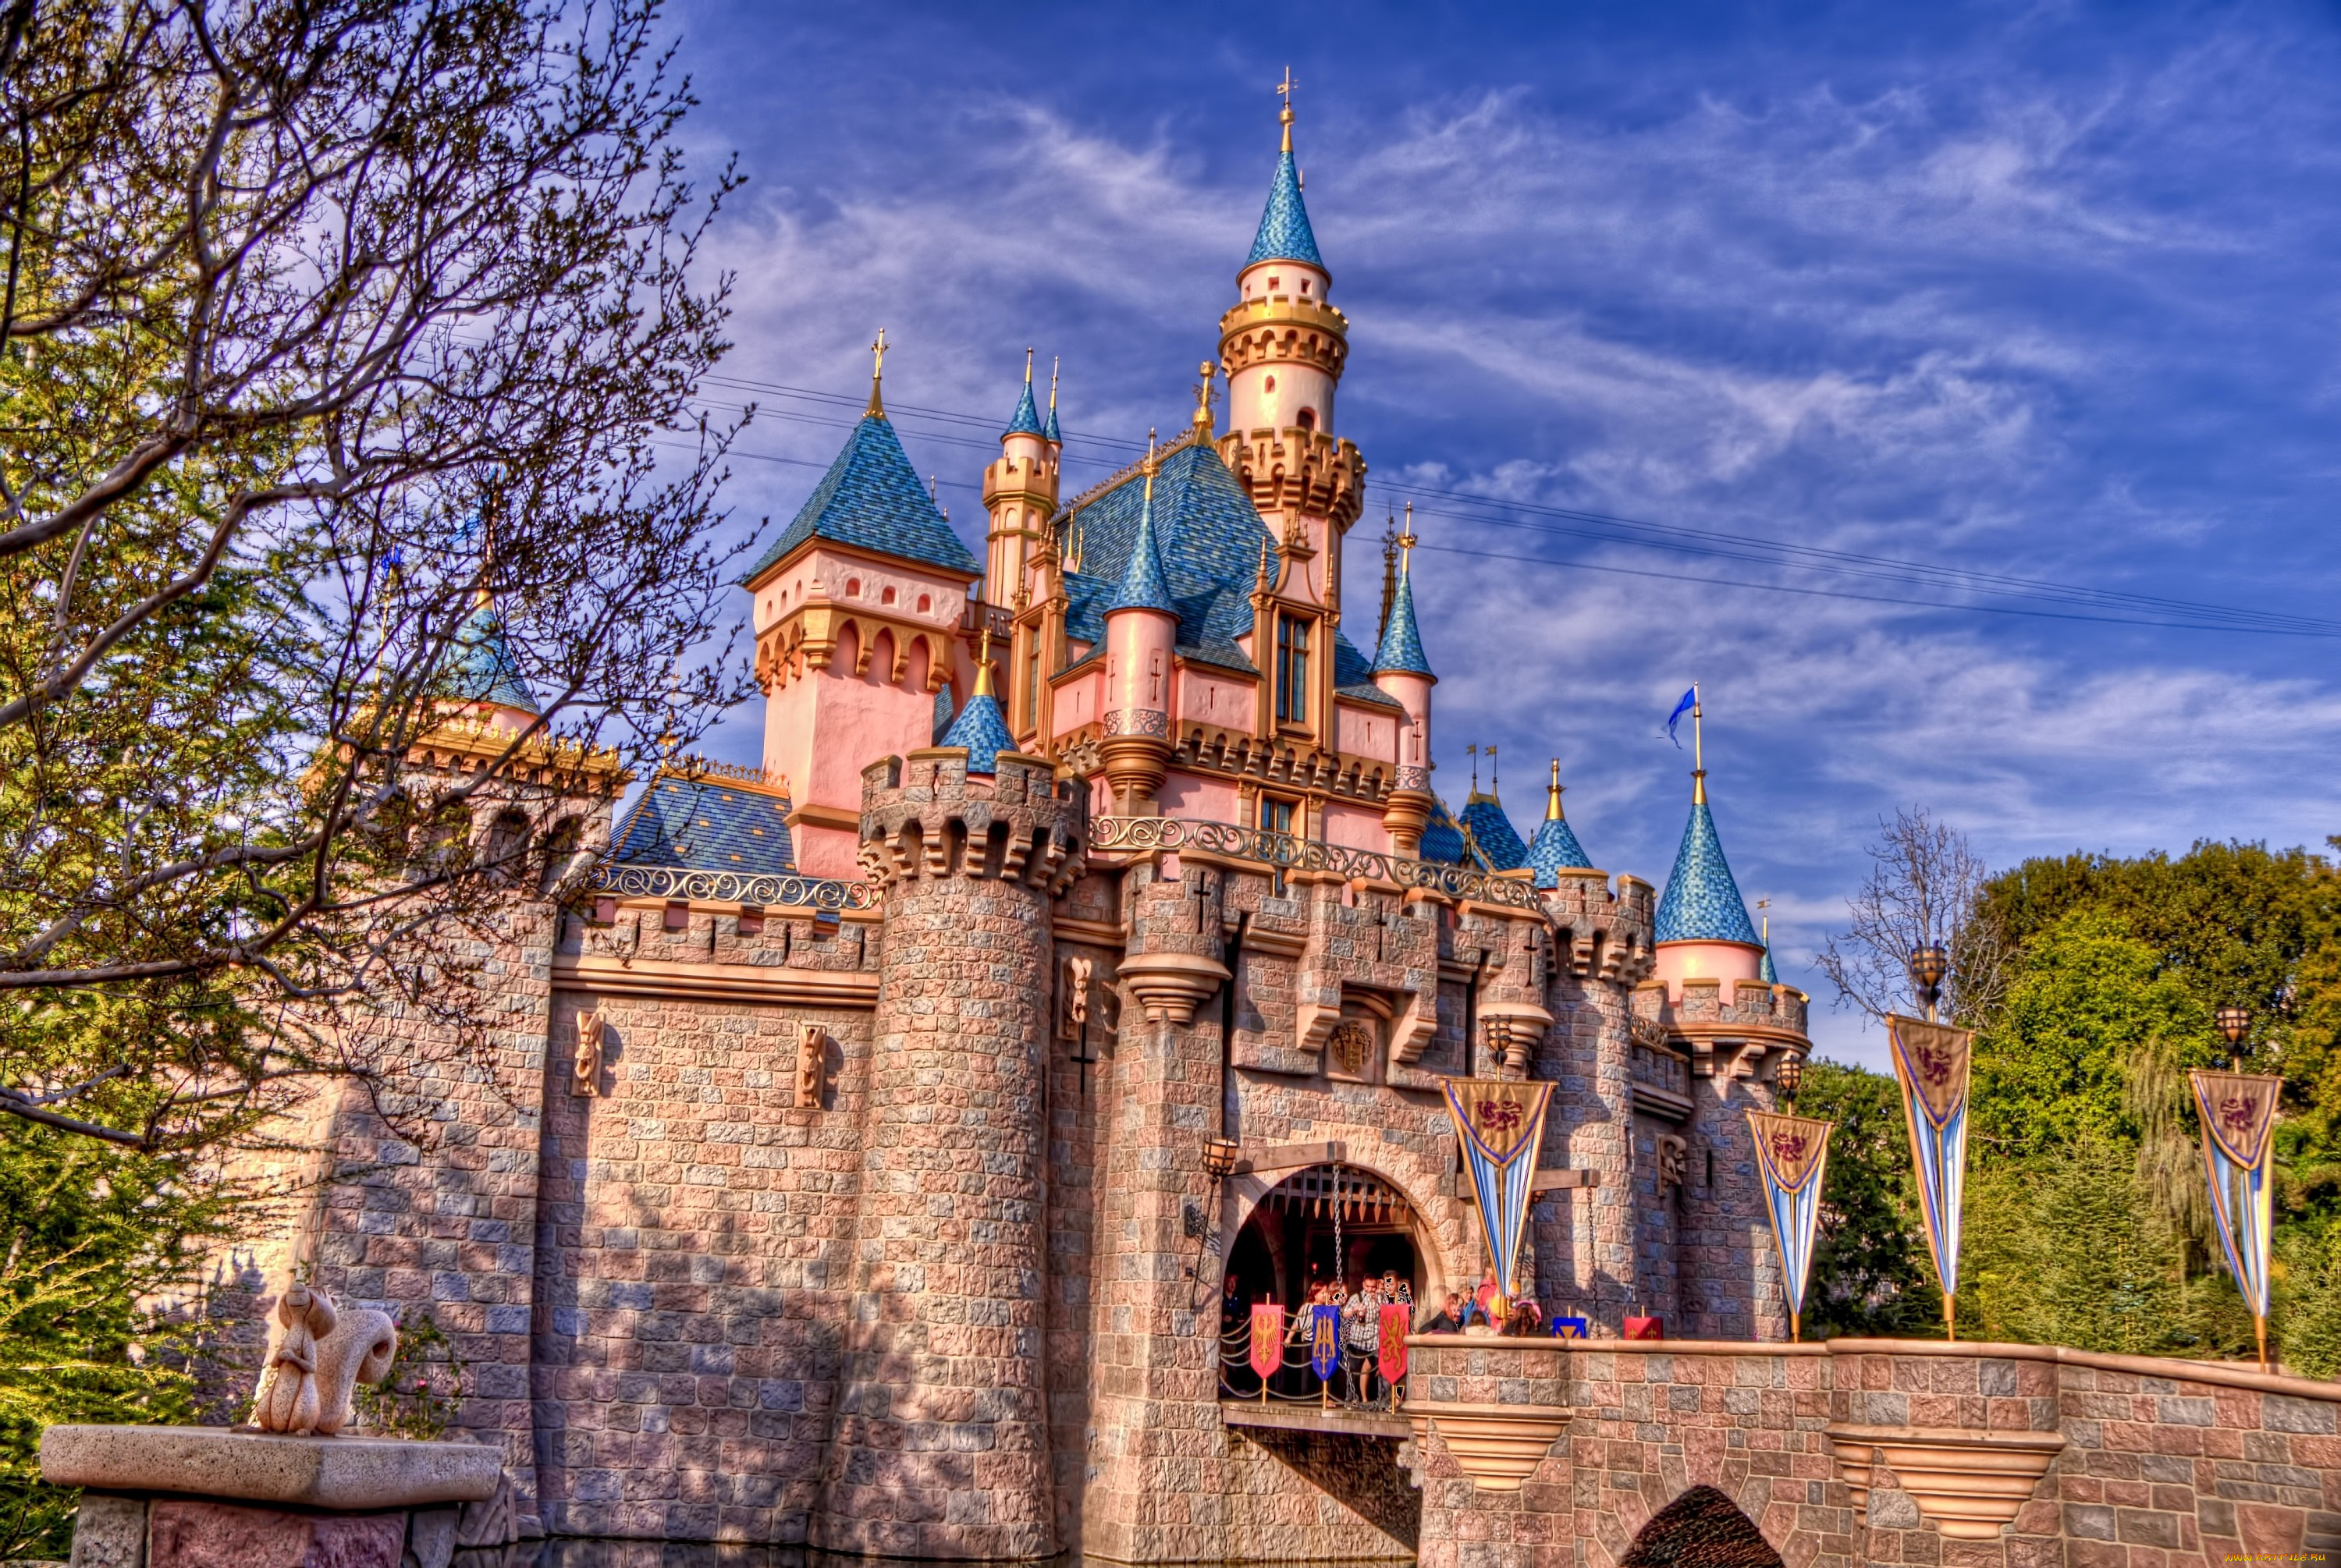 Замок диснейленд. Замок спящей красавицы Disneyland. Диснейленд Париж замок спящей красавицы. Диснейленд замок спящей красавицы Fon. Диснейленд в Париже фото замка спящей красавицы.